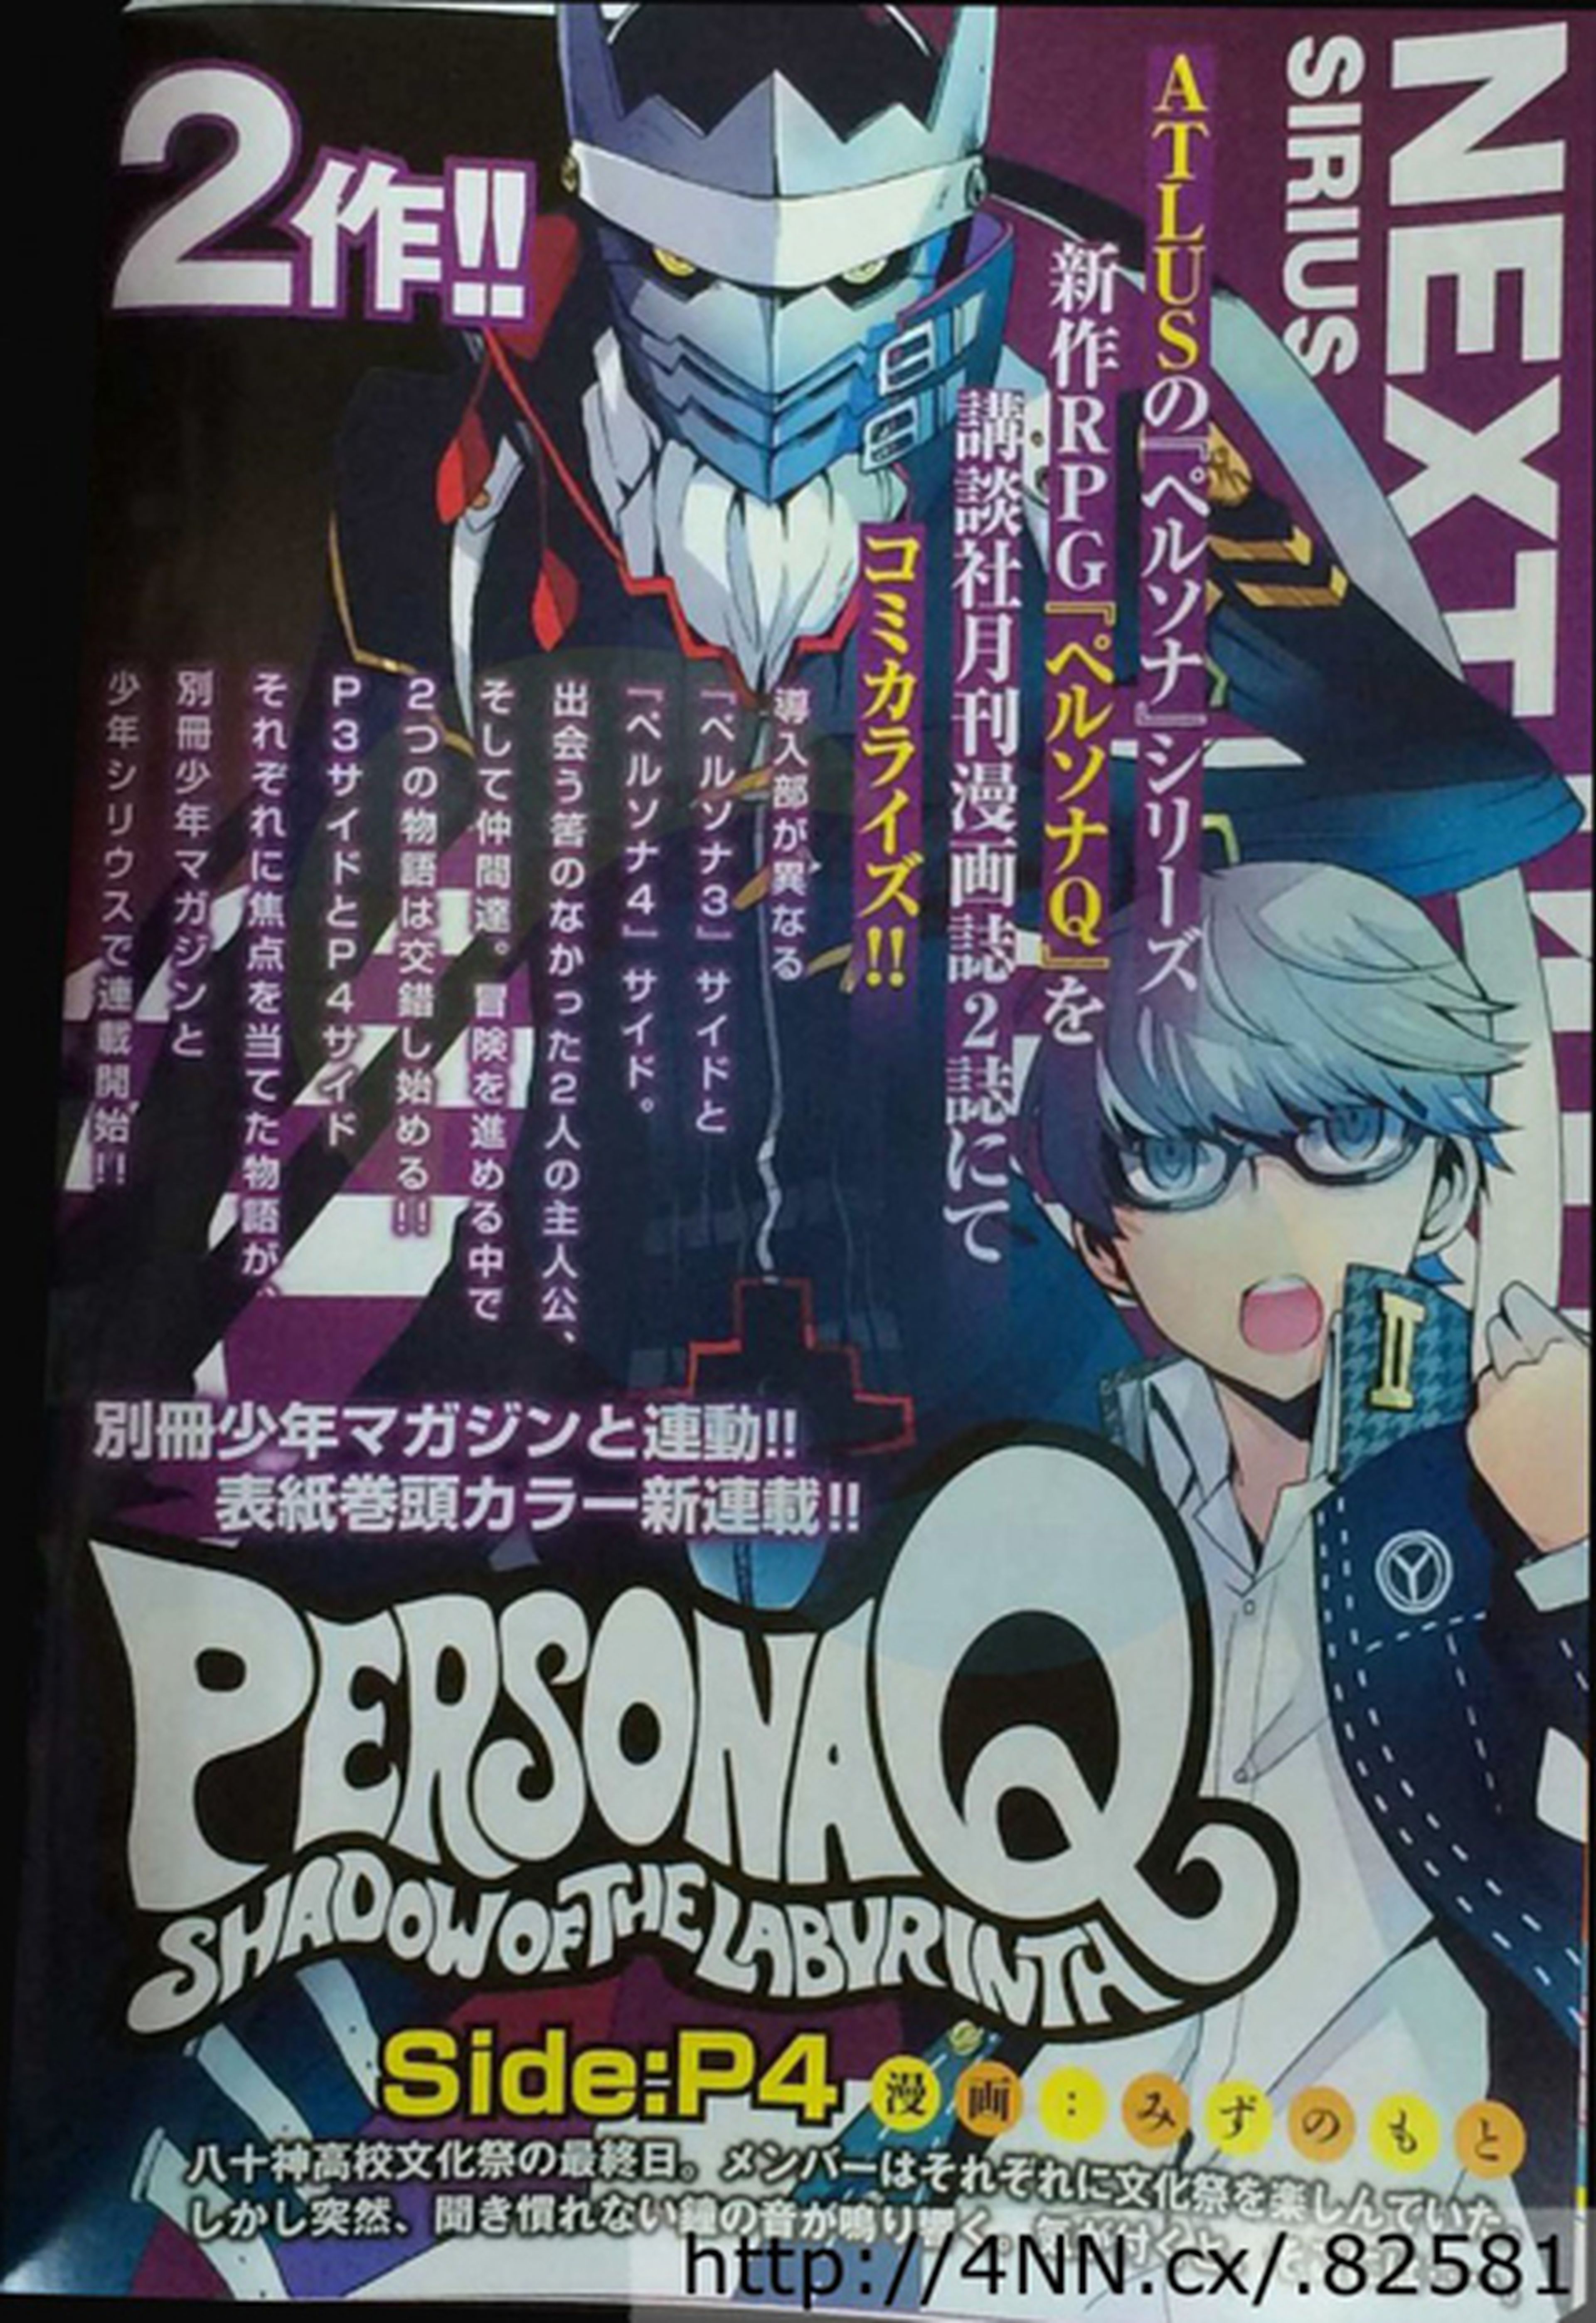 Persona Q: Shadow of the Labyrinth tendrá dos adaptaciones a manga